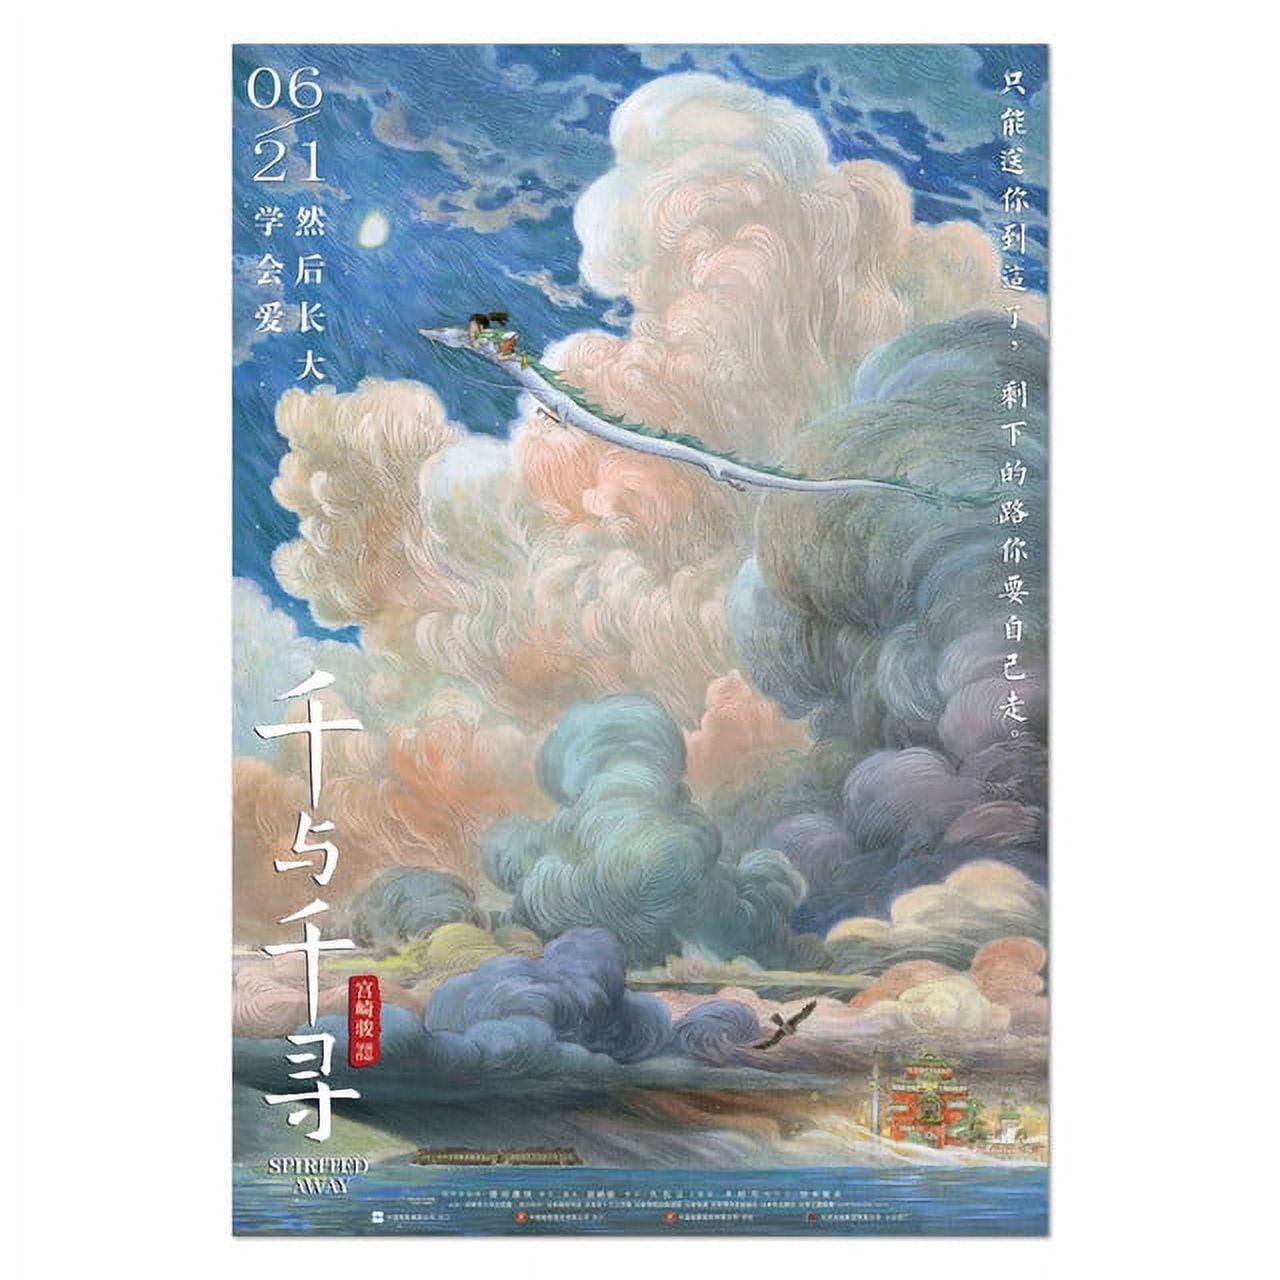 Spirited Away Poster - Chinese Promotional Art Stuido Ghibli 24x36 